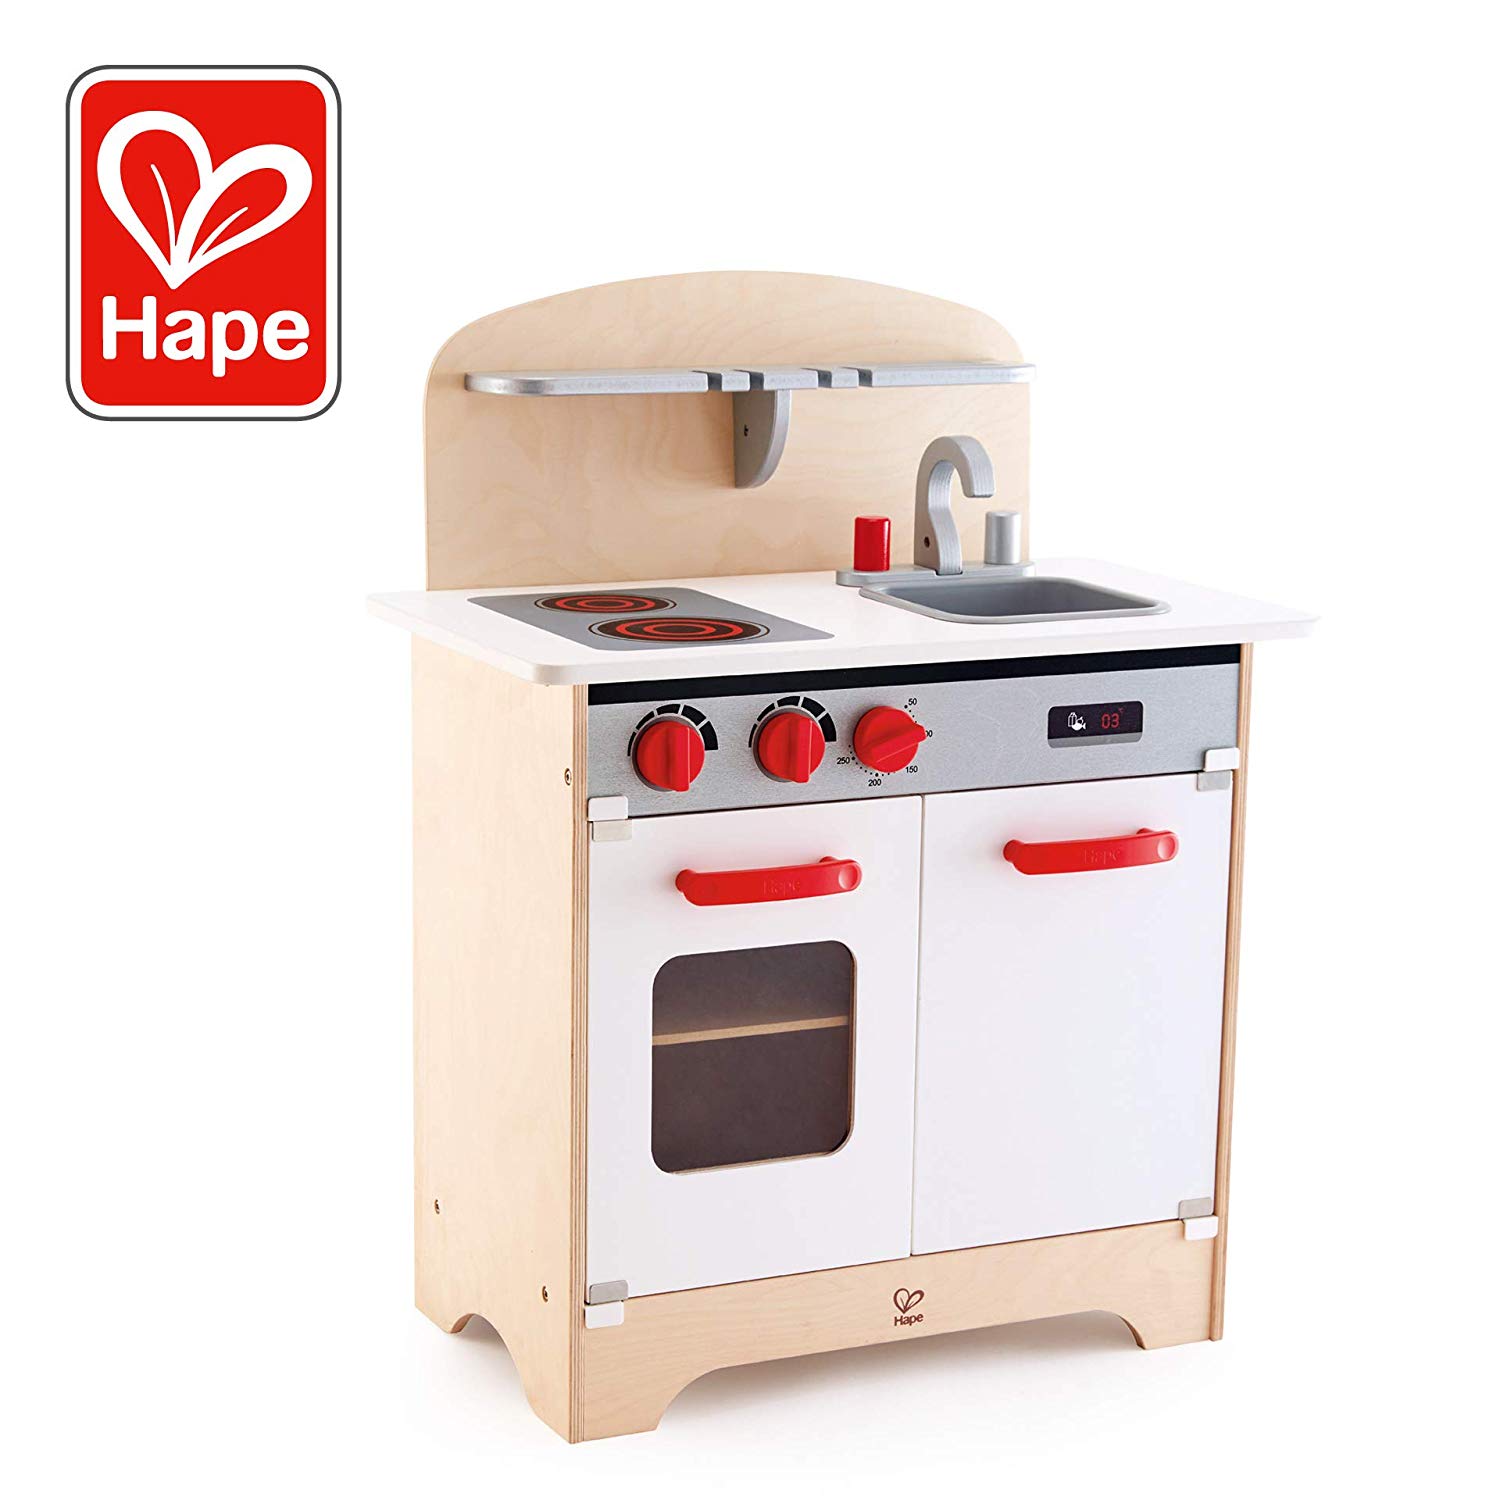 Hape International Hape E3152 Play Synthetic Wooden Kitchen Cooker Gourmet White